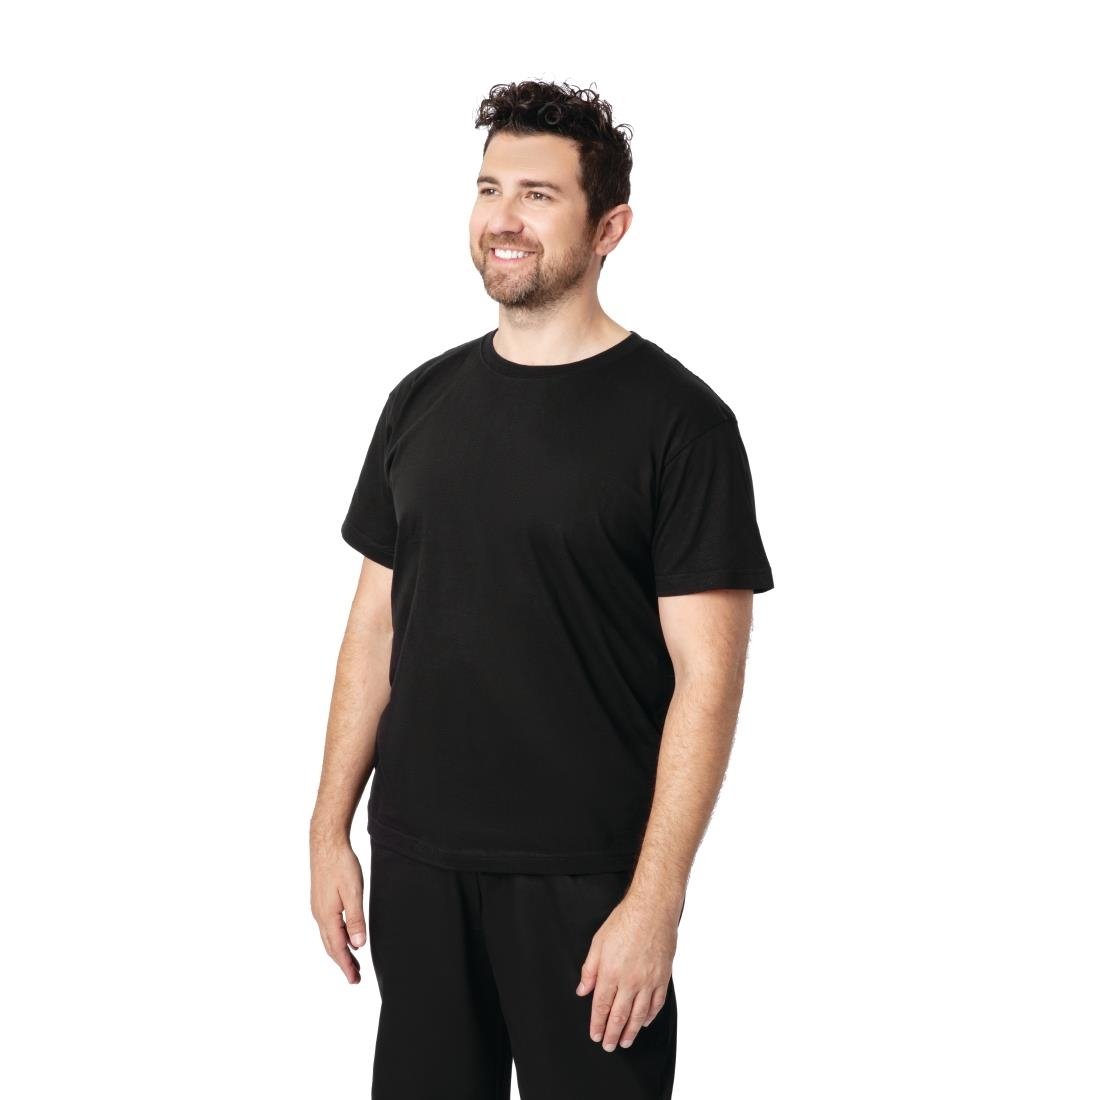 A295-4XL Unisex Chef T-Shirt Black 4XL JD Catering Equipment Solutions Ltd